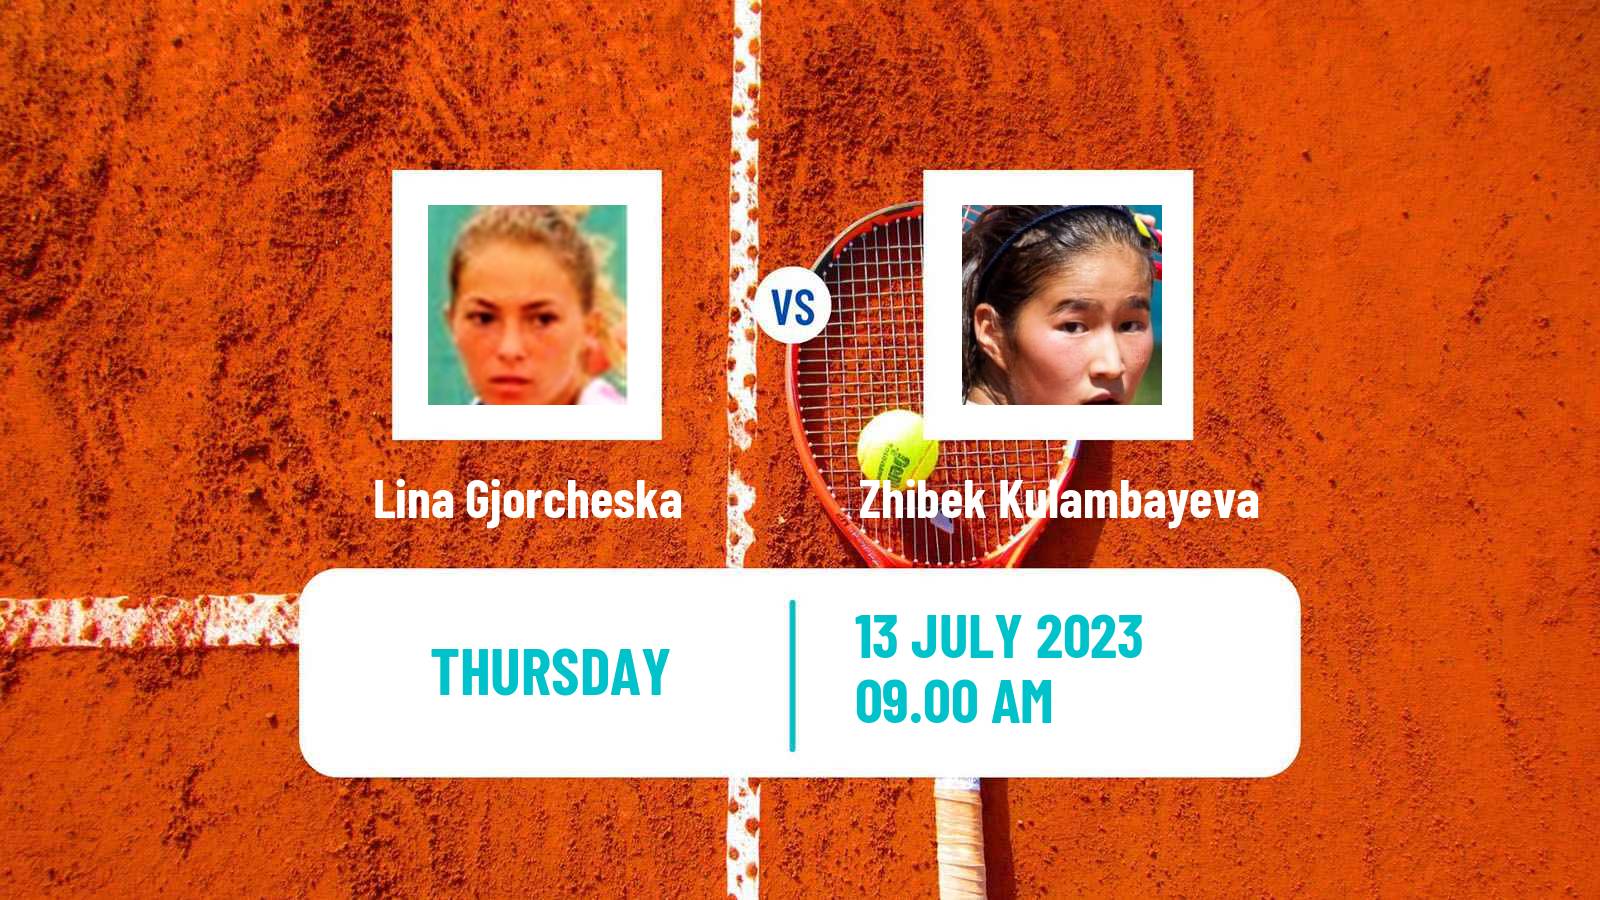 Tennis ITF W60 Rome 2 Women Lina Gjorcheska - Zhibek Kulambayeva